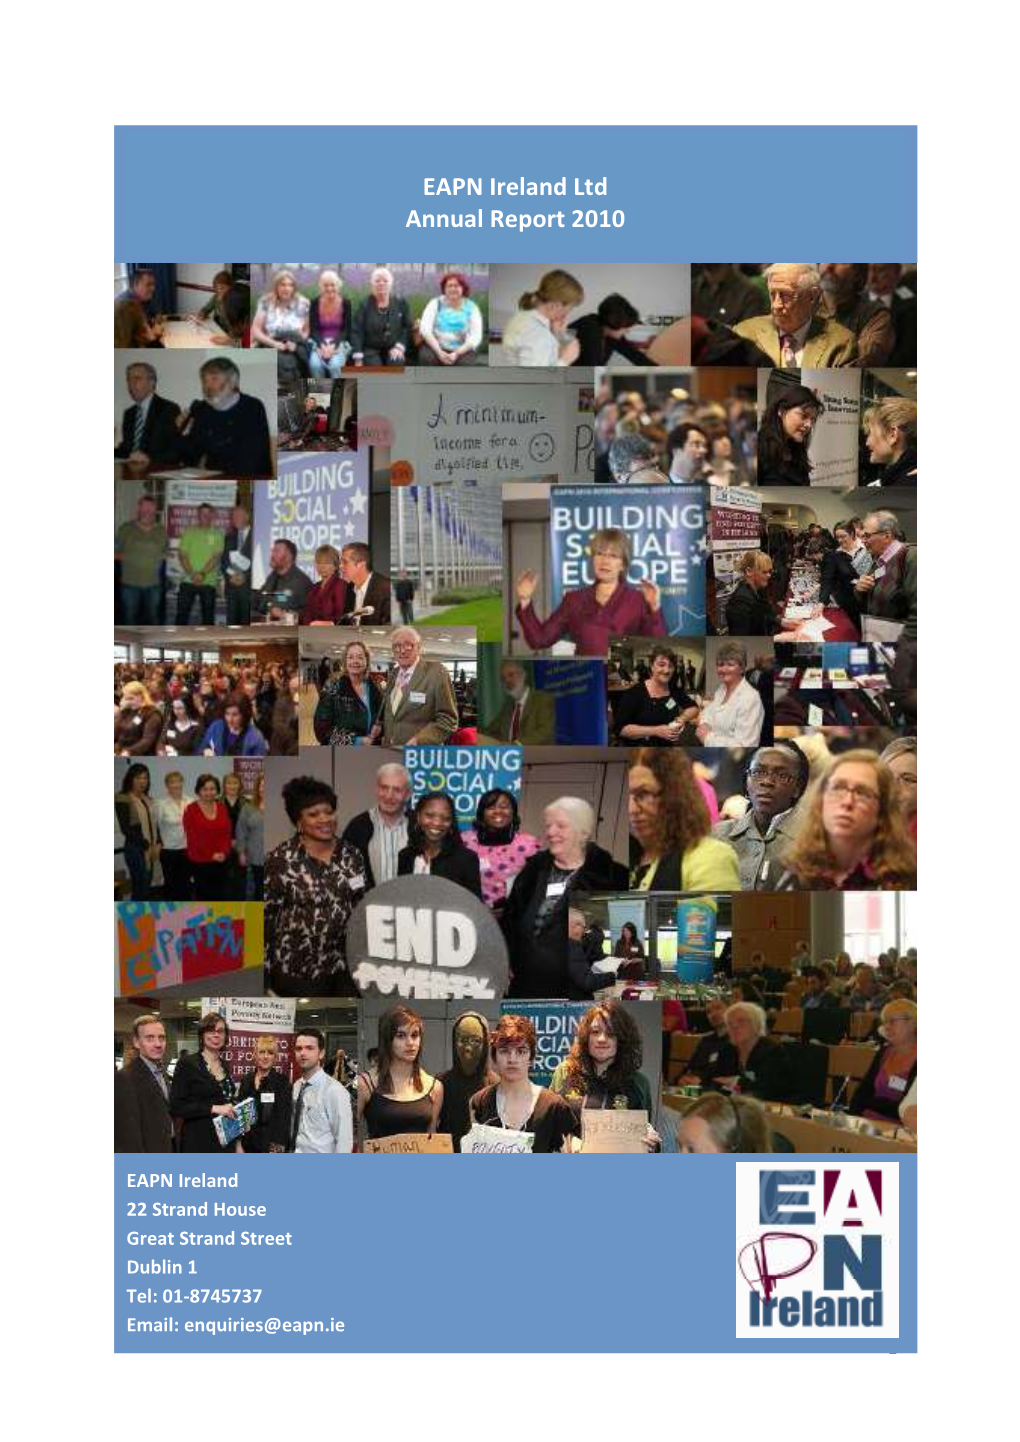 EAPN Ireland's Annual Report 2010